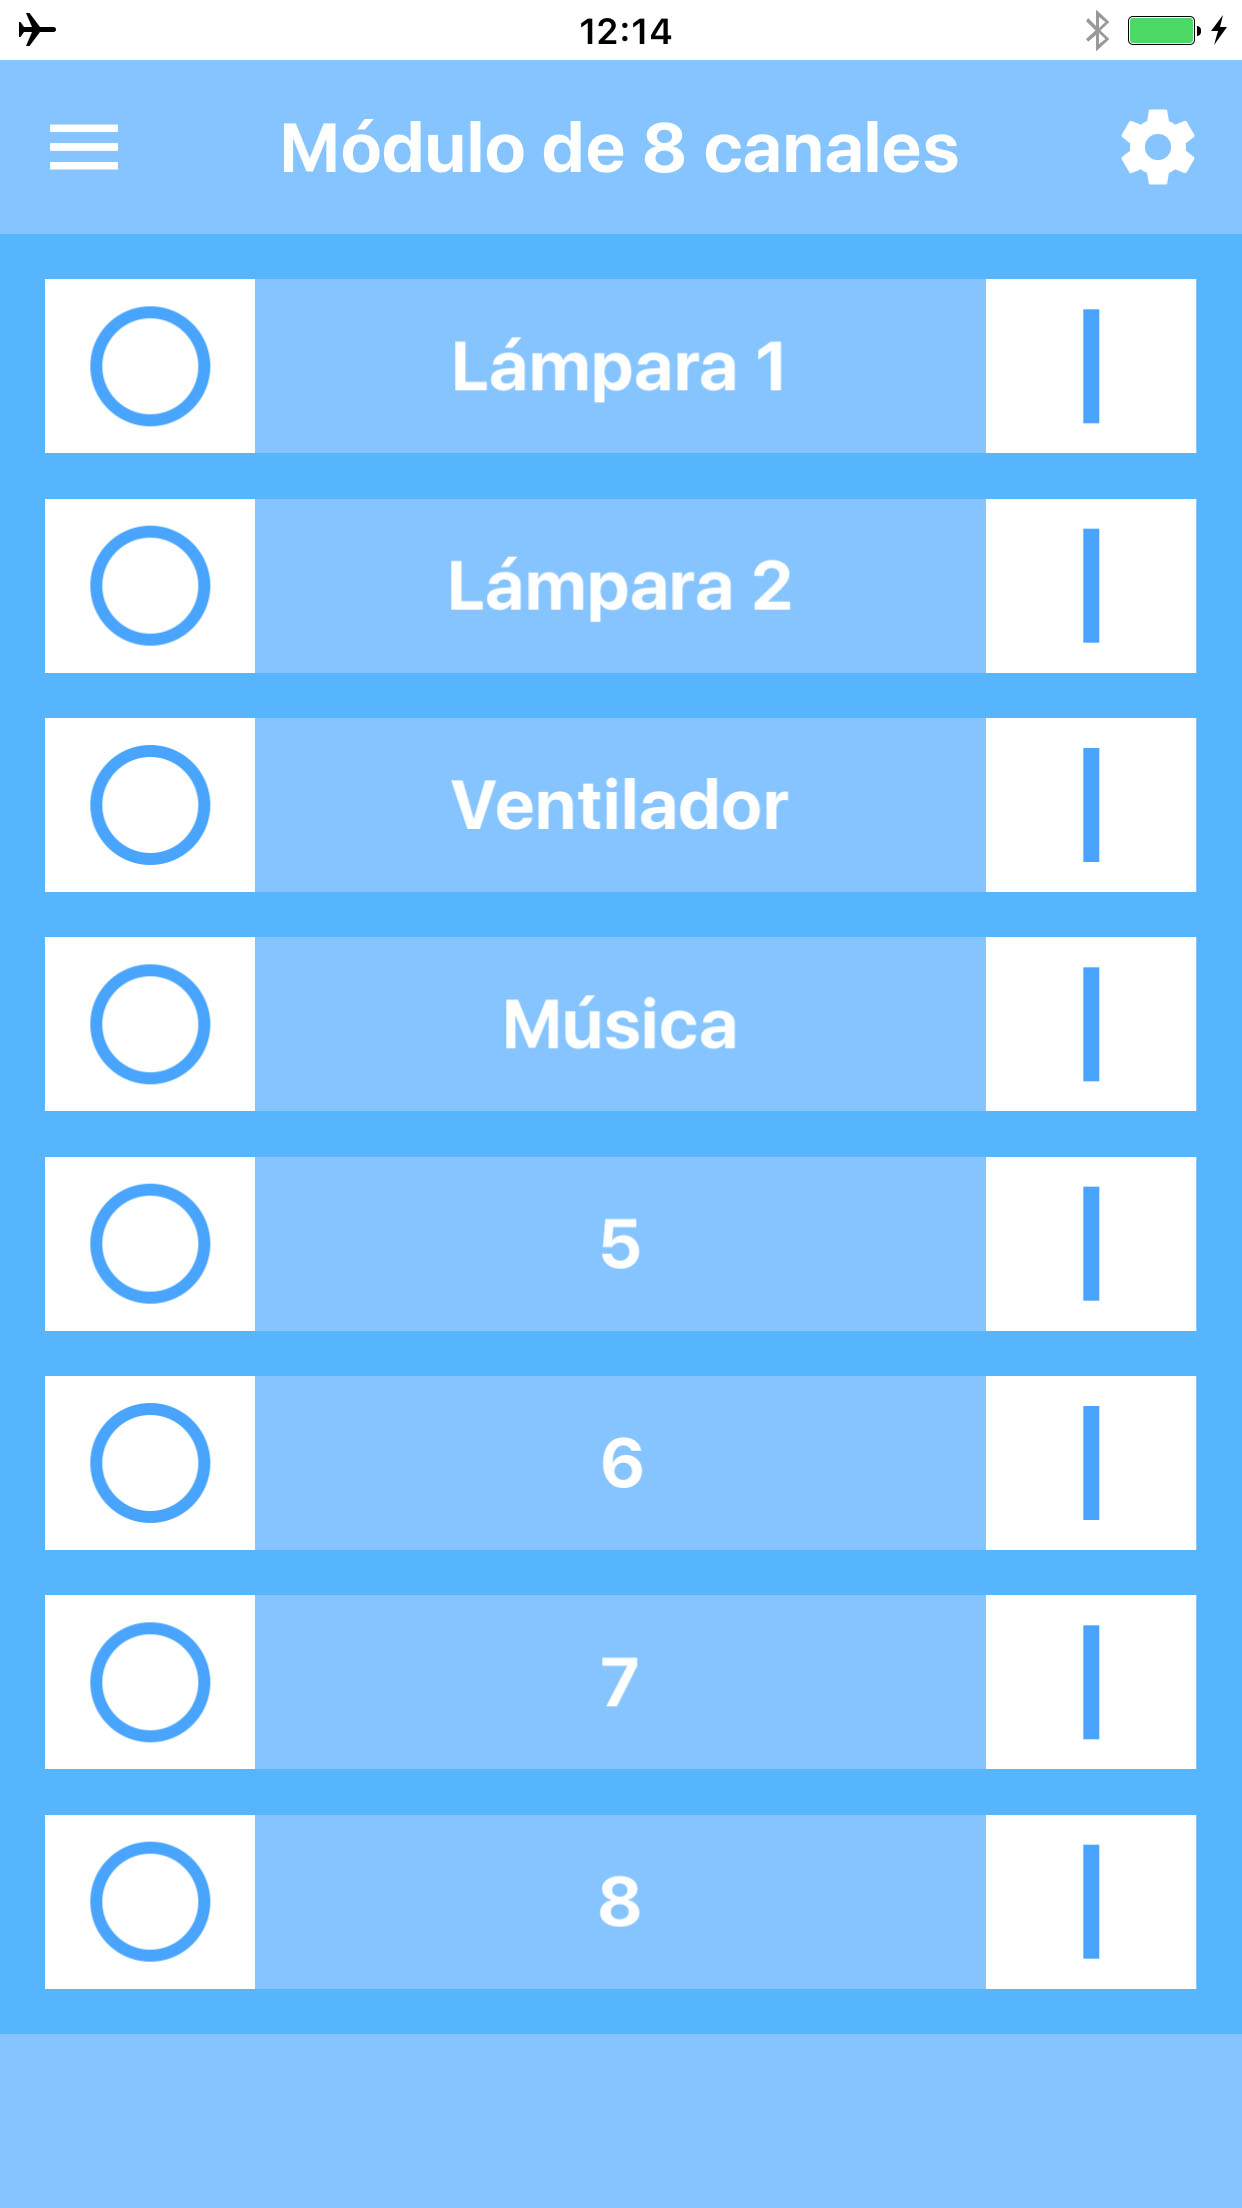 Módulo de relé de 8 canales (iPhone app)